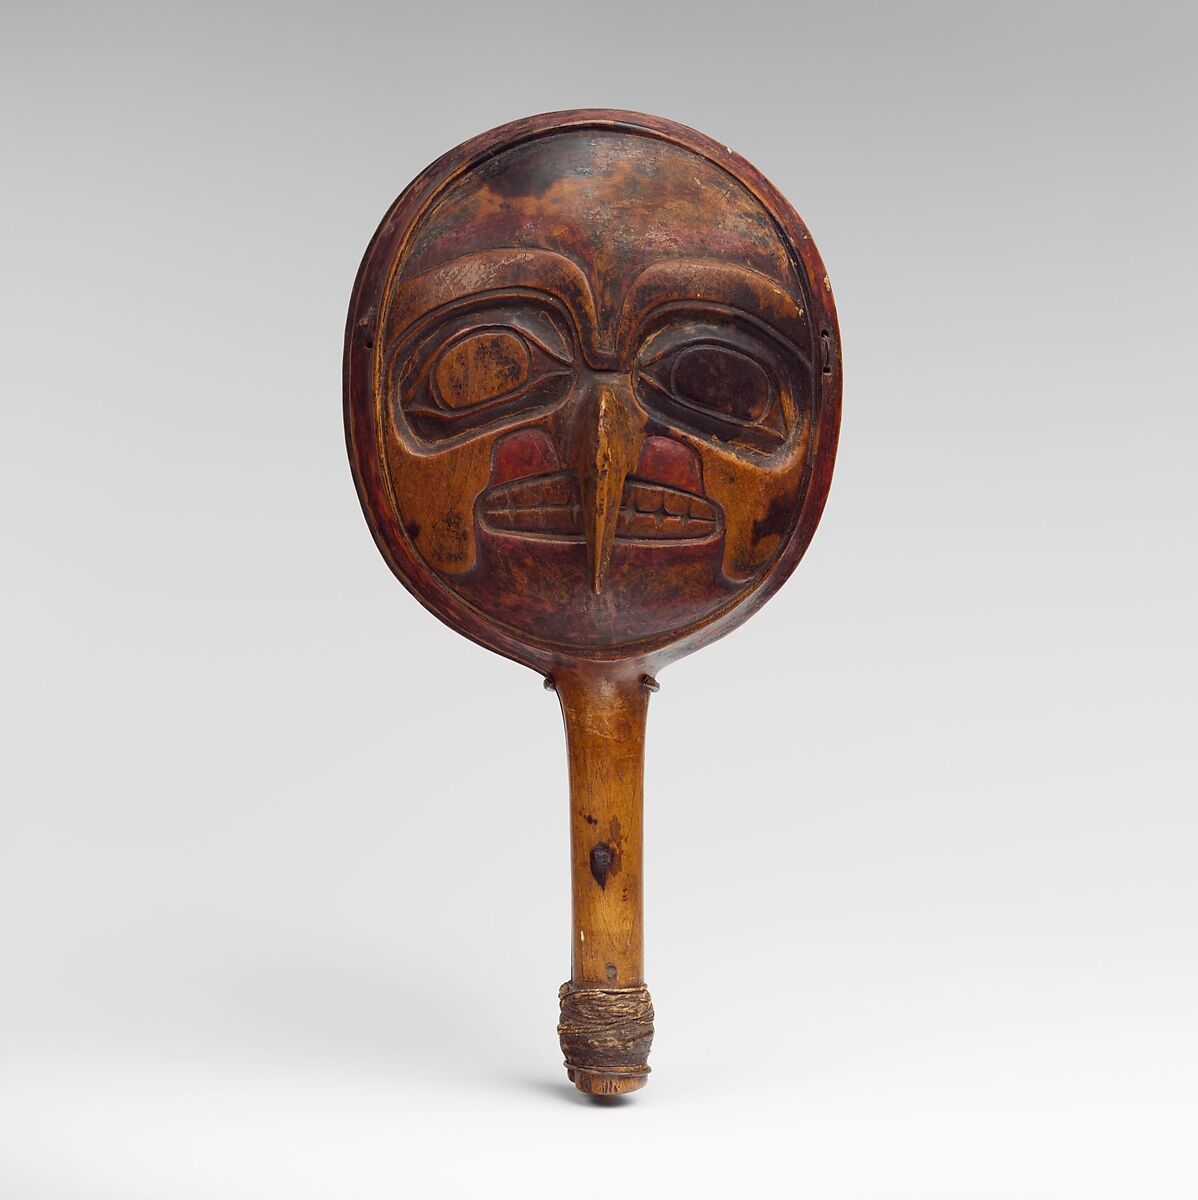 Rattle, Wood, string, pigment, Native American (Haida or Tsimshian) 